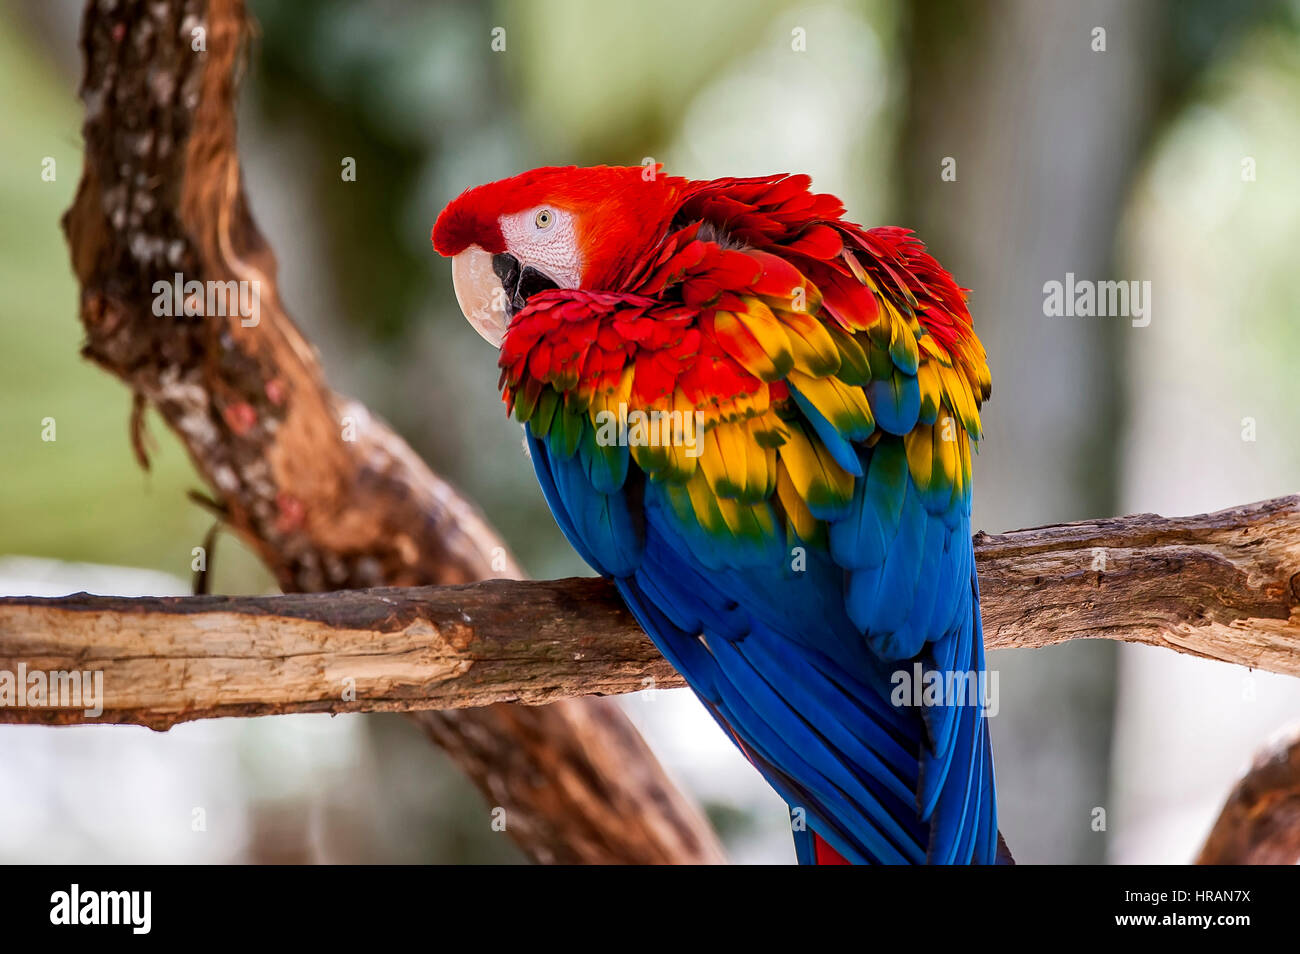 Red-and-green Macaw (Ara chloropterus), photographed in Concenção da Barra, Espírito Santo - Brazil. Atlantic Forest Biome. Captive animal. Stock Photo